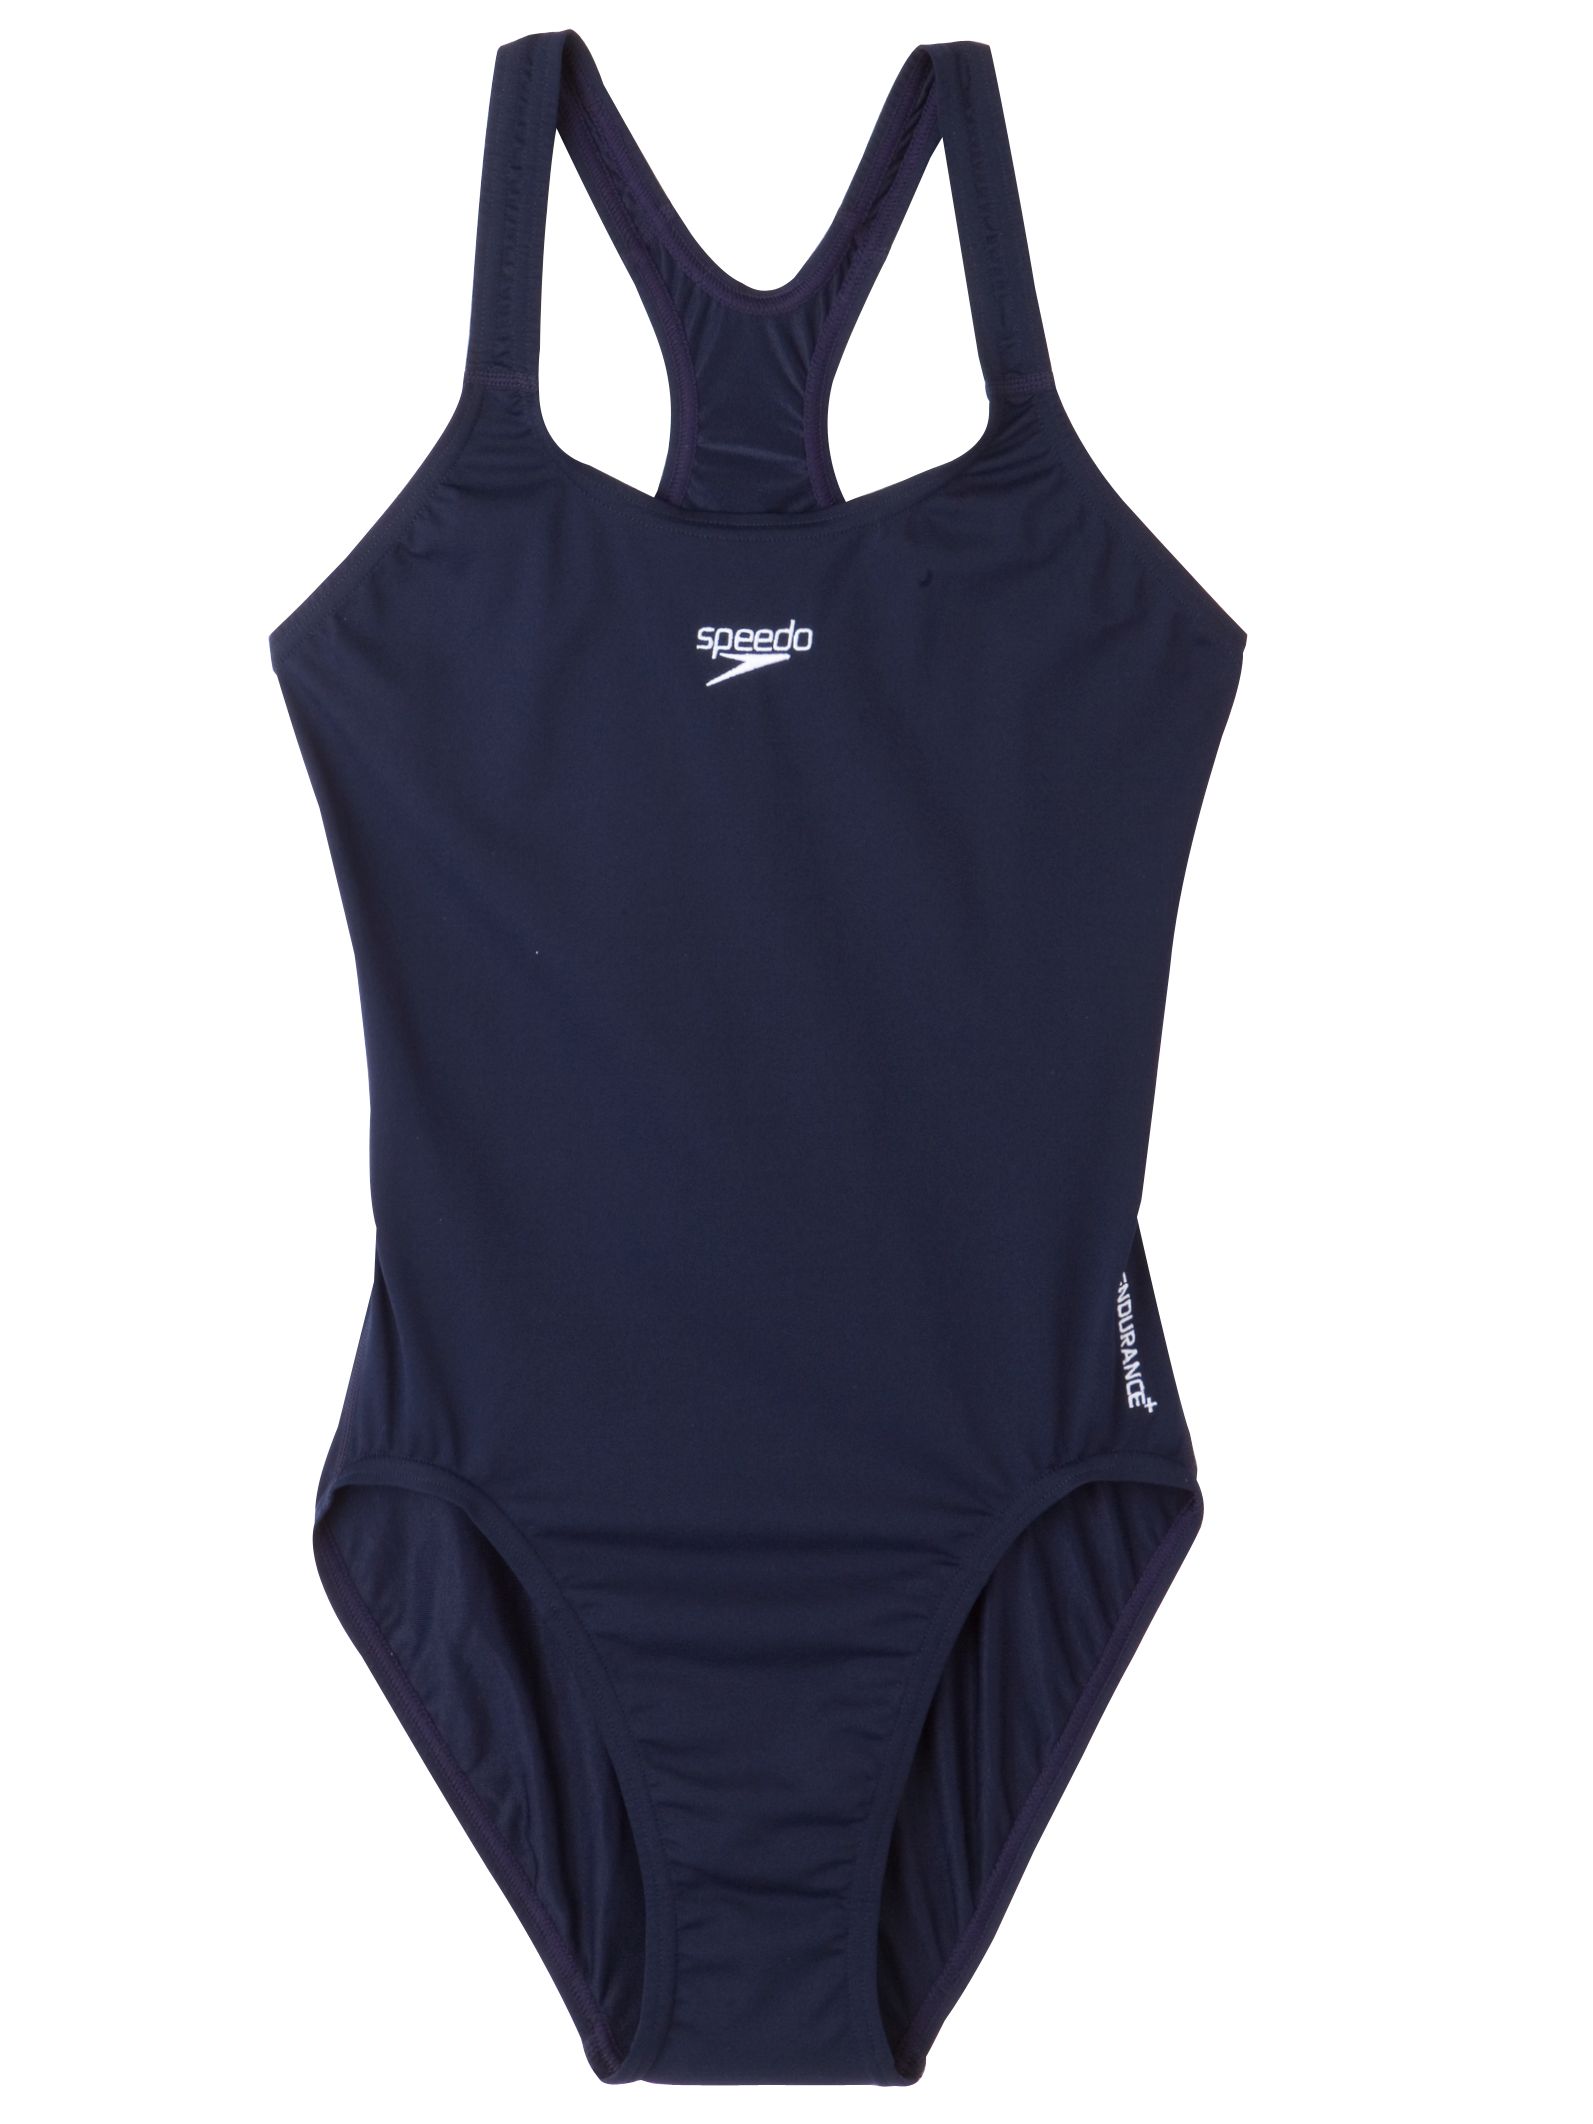 Speedo Endurance  Medalist Swimsuit, Navy, Size 42